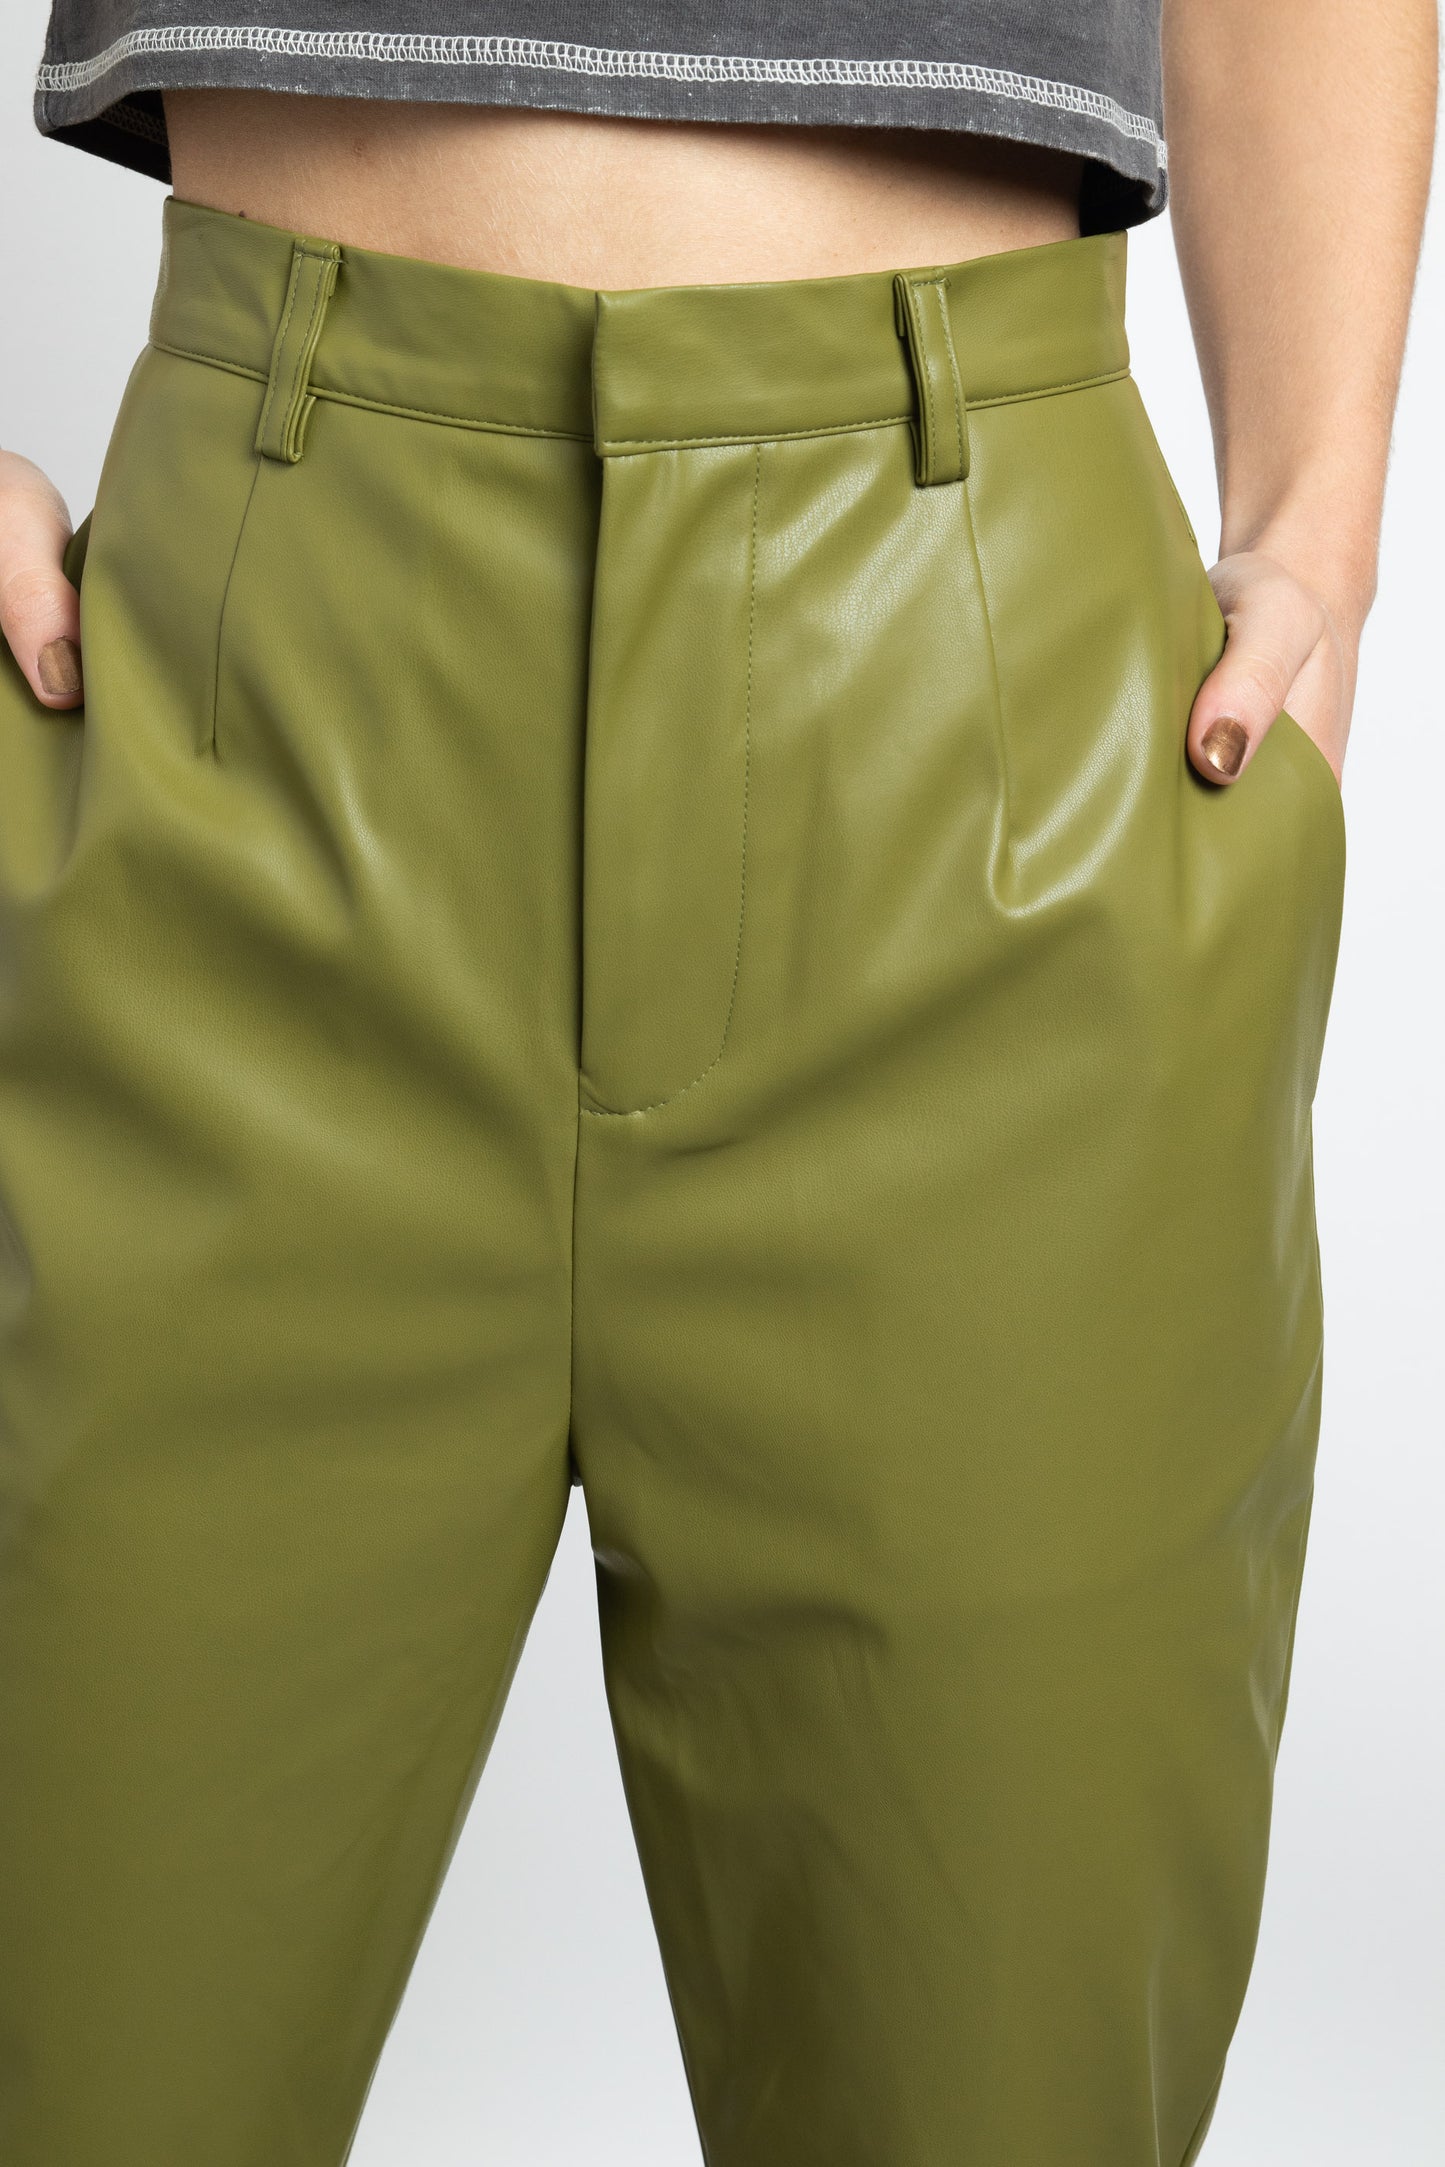 Daisy Street - Moss Green PU Trousers